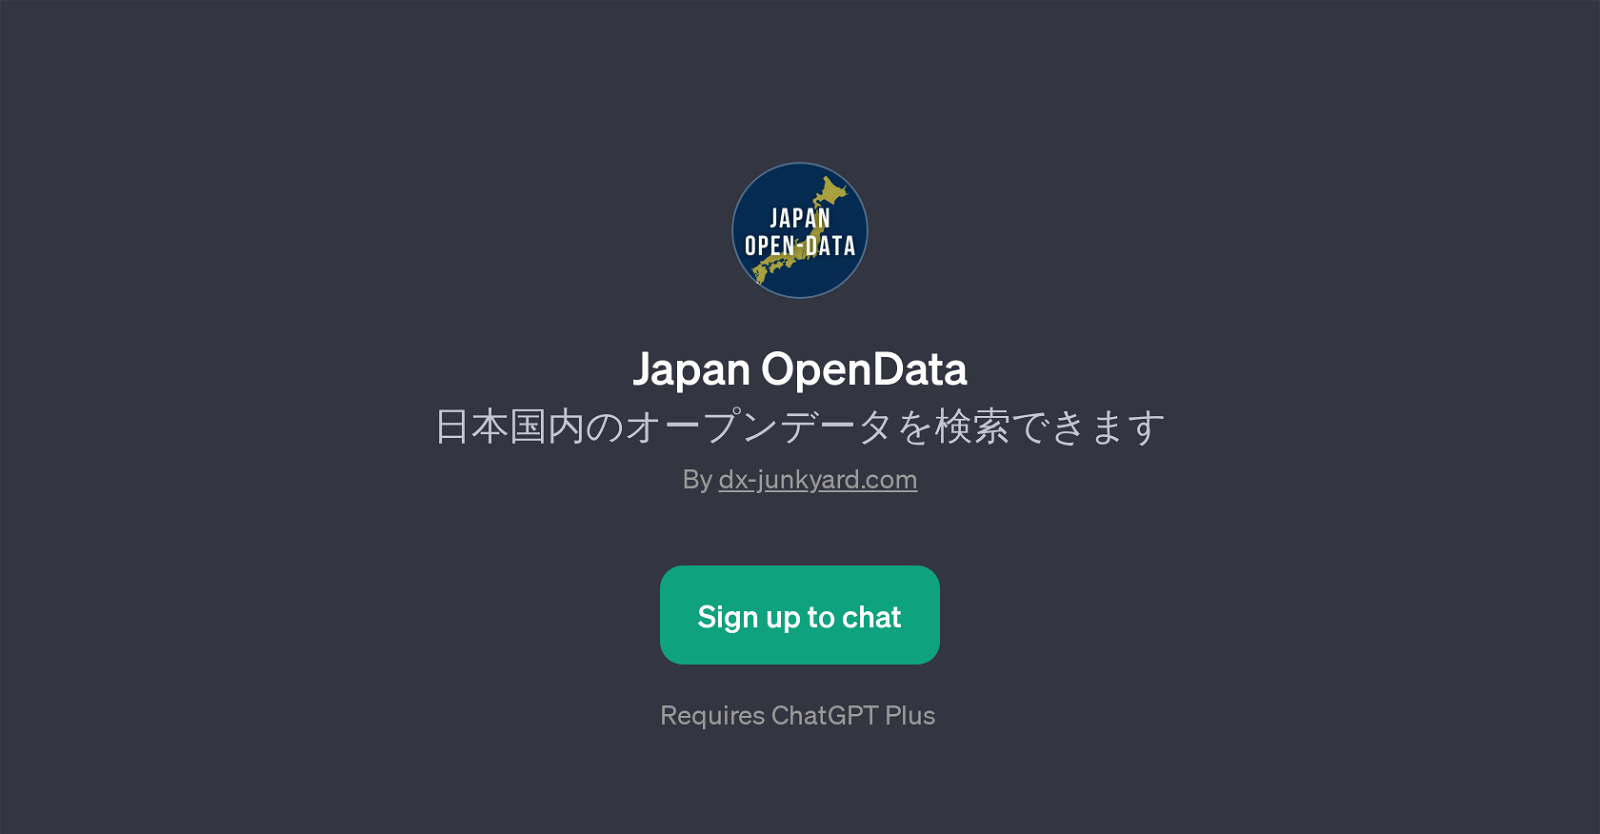 Japan OpenData website